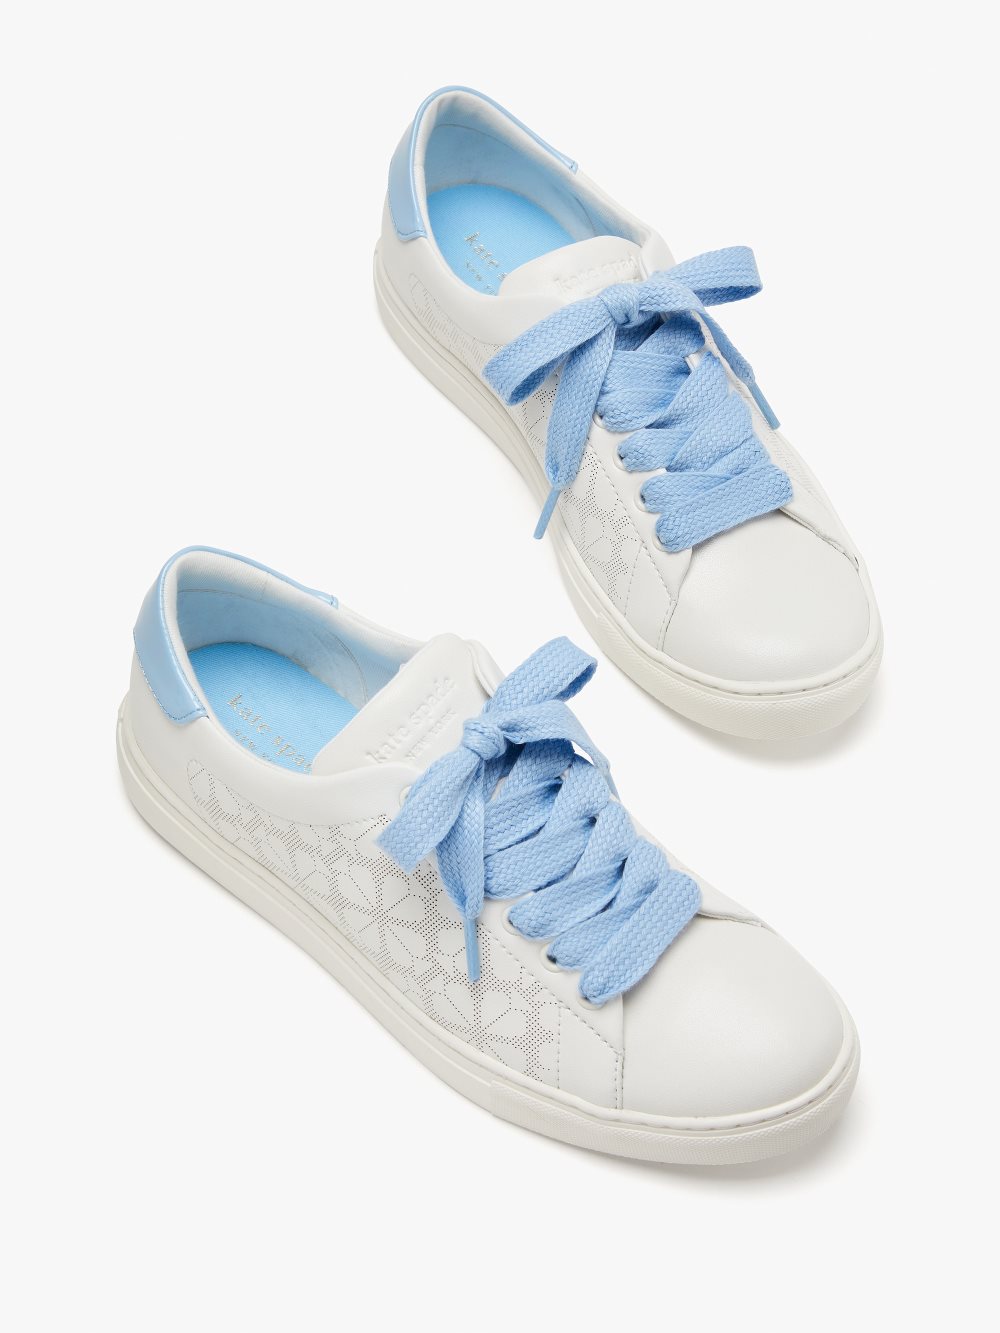 Women's opt wht/celeste blu audrey sneakers | Kate Spade